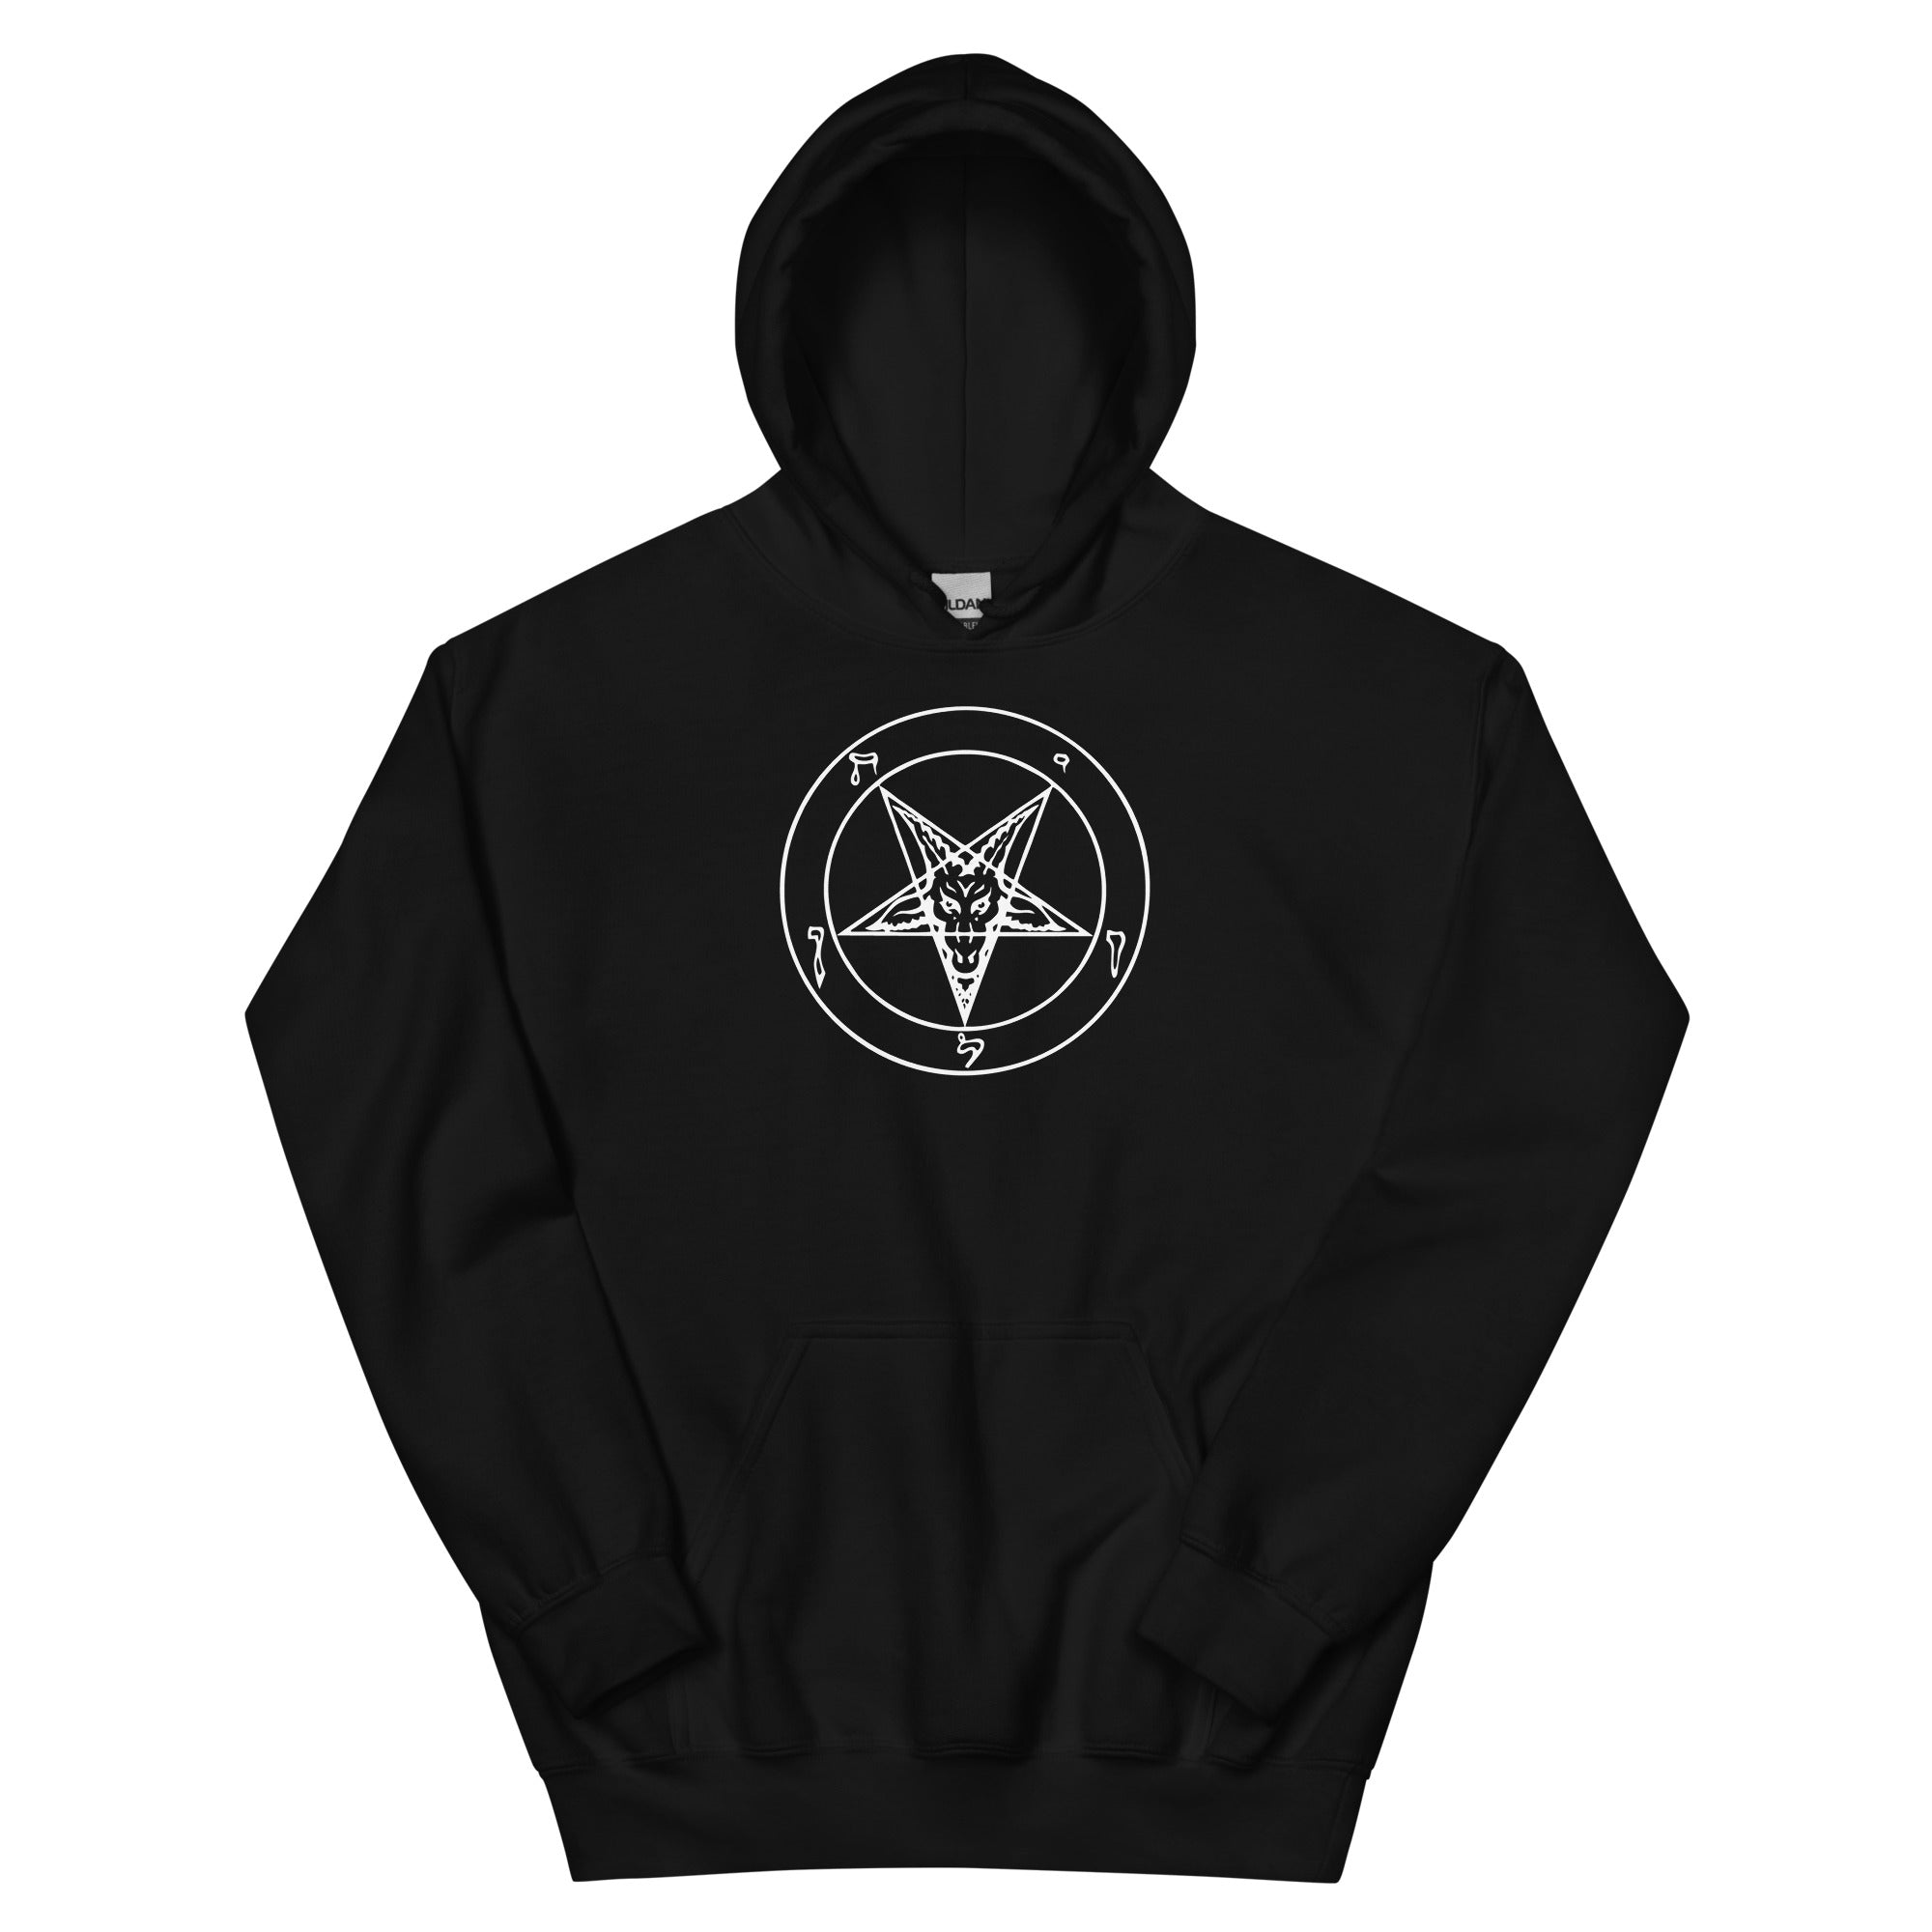 Sigil of Baphomet Occult Symbol on Black Women's Hoodie Sweatshirt - Edge of Life Designs